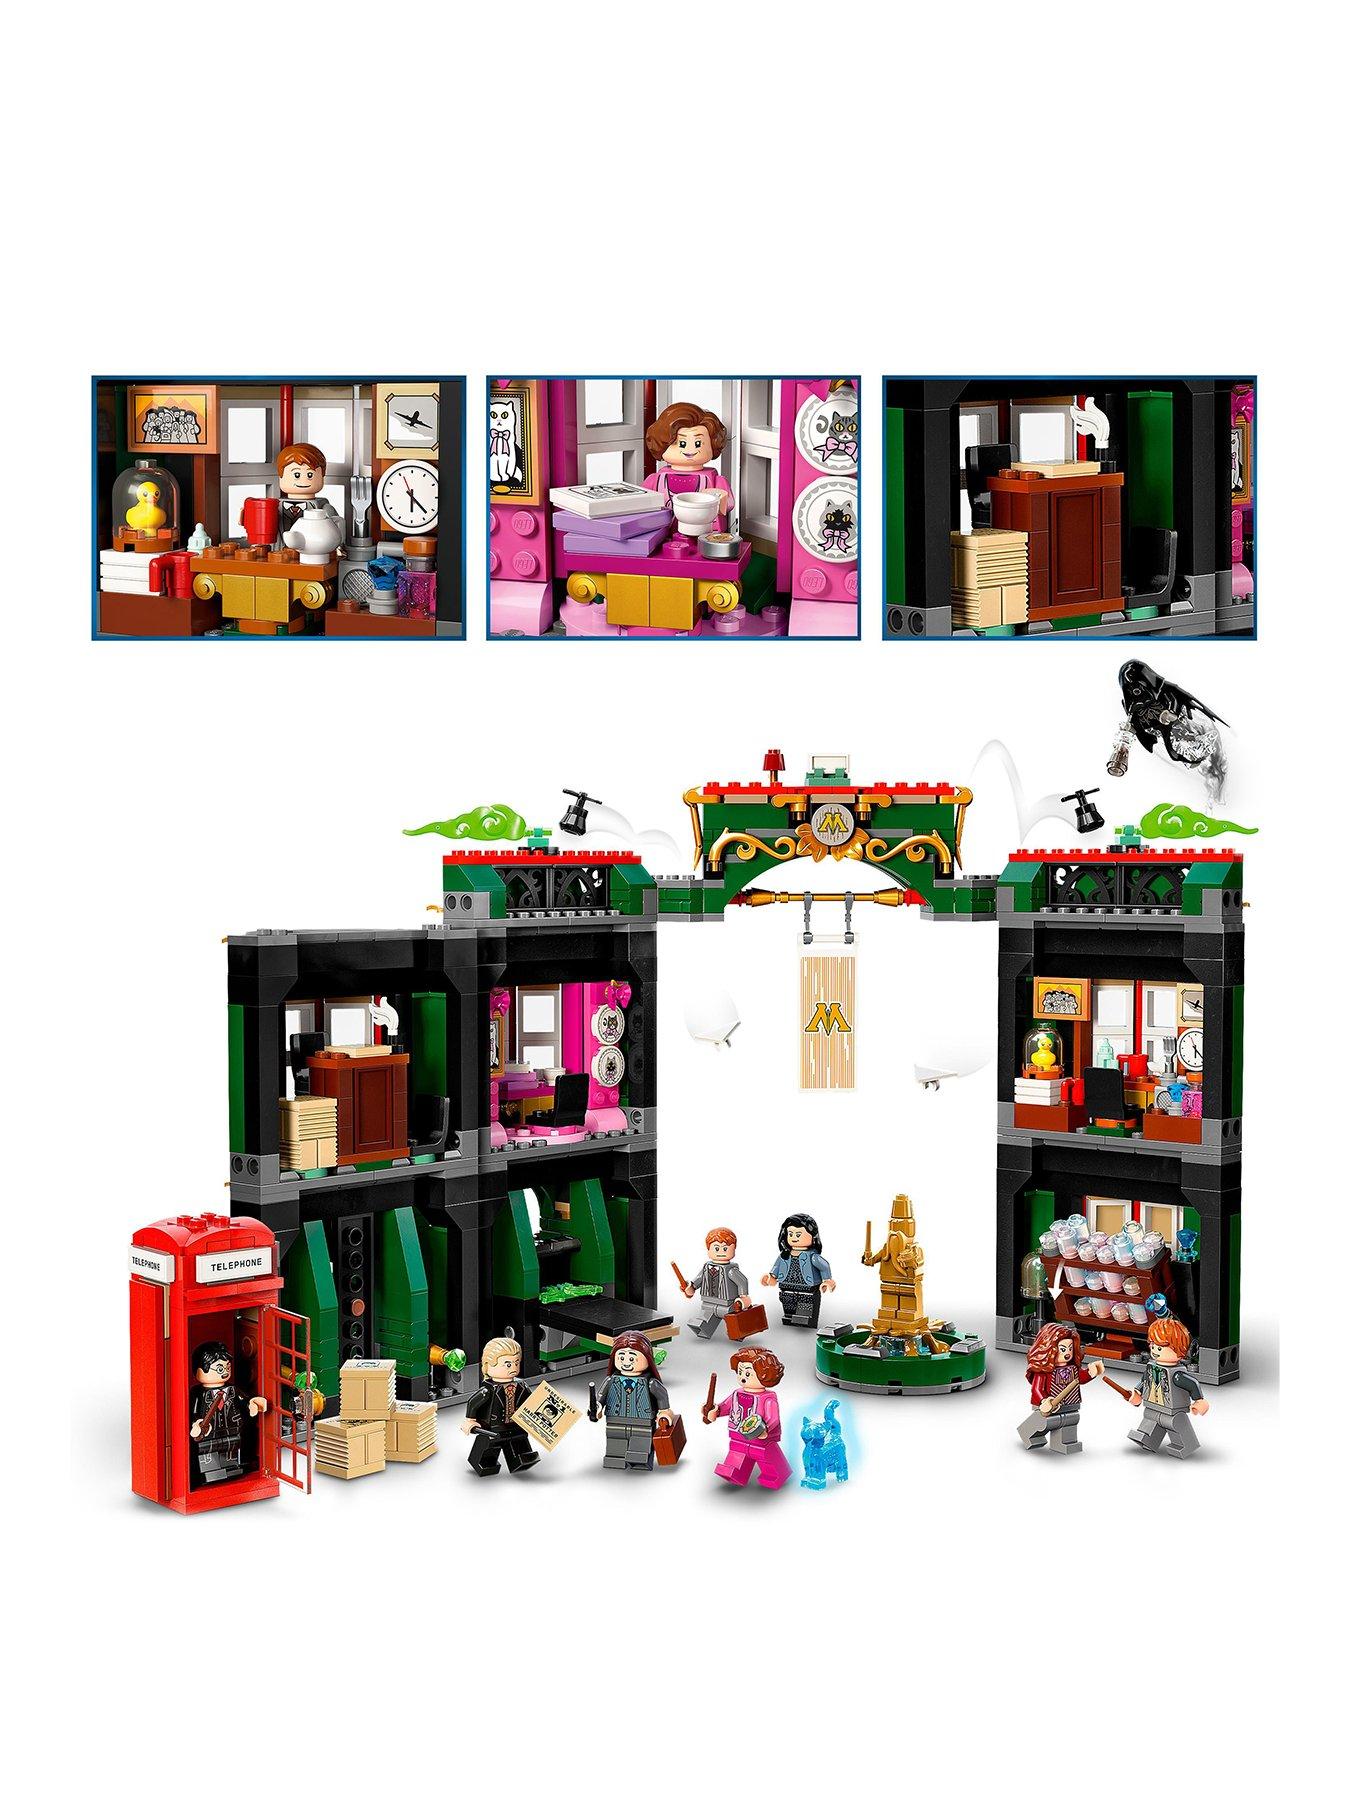 310 Harry Potter Legos ideas  legos, harry potter, lego harry potter